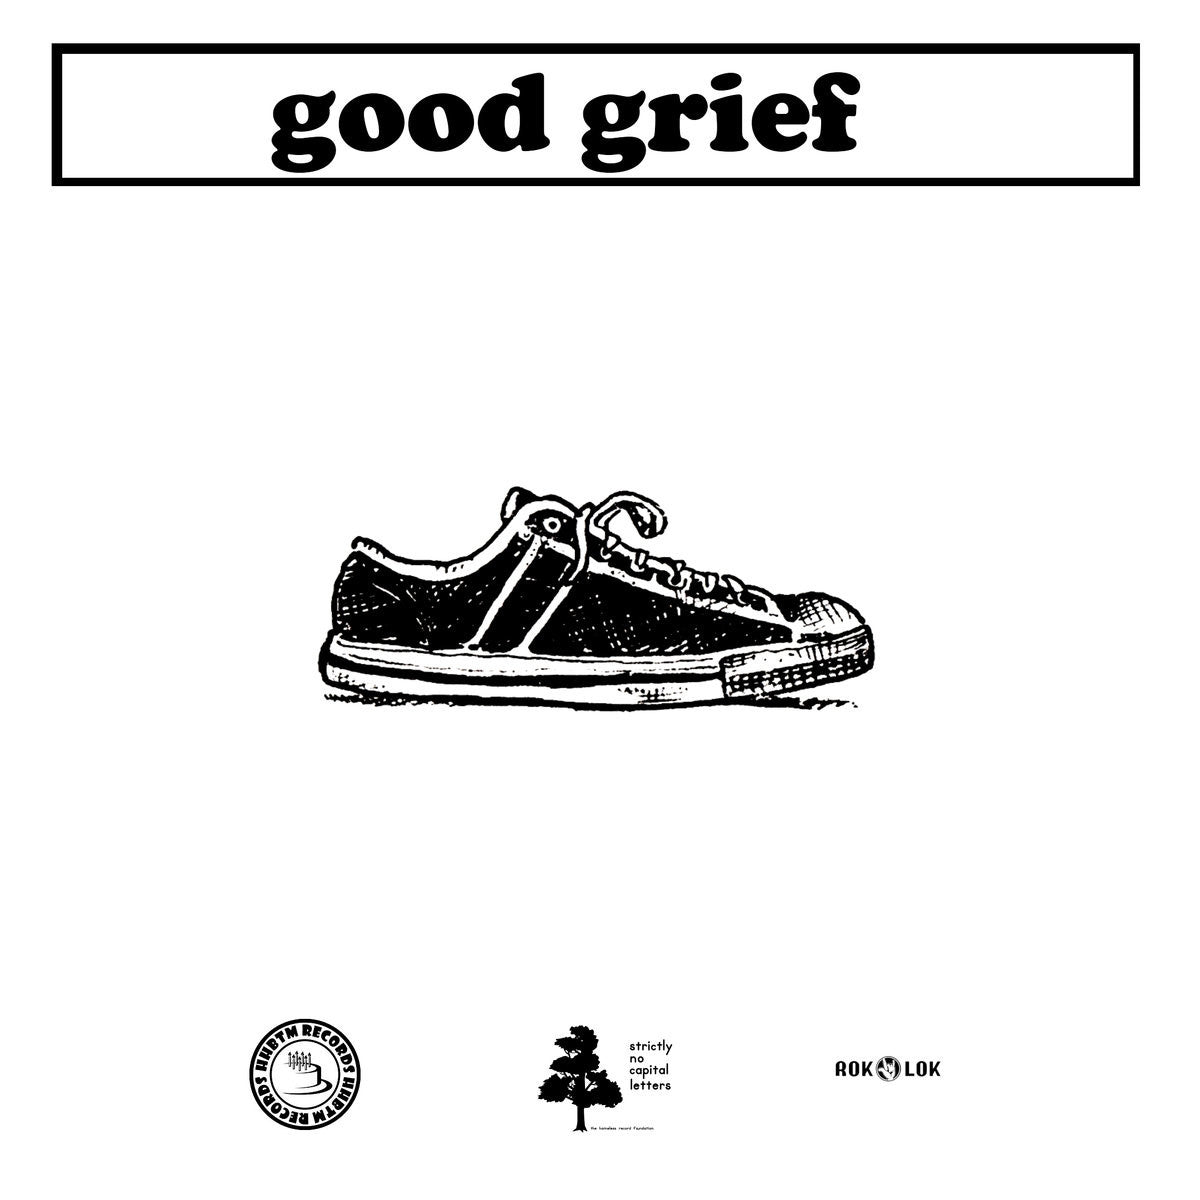 EUREKA CALIFORNIA / GOOD GRIEF "Split" seven inch record